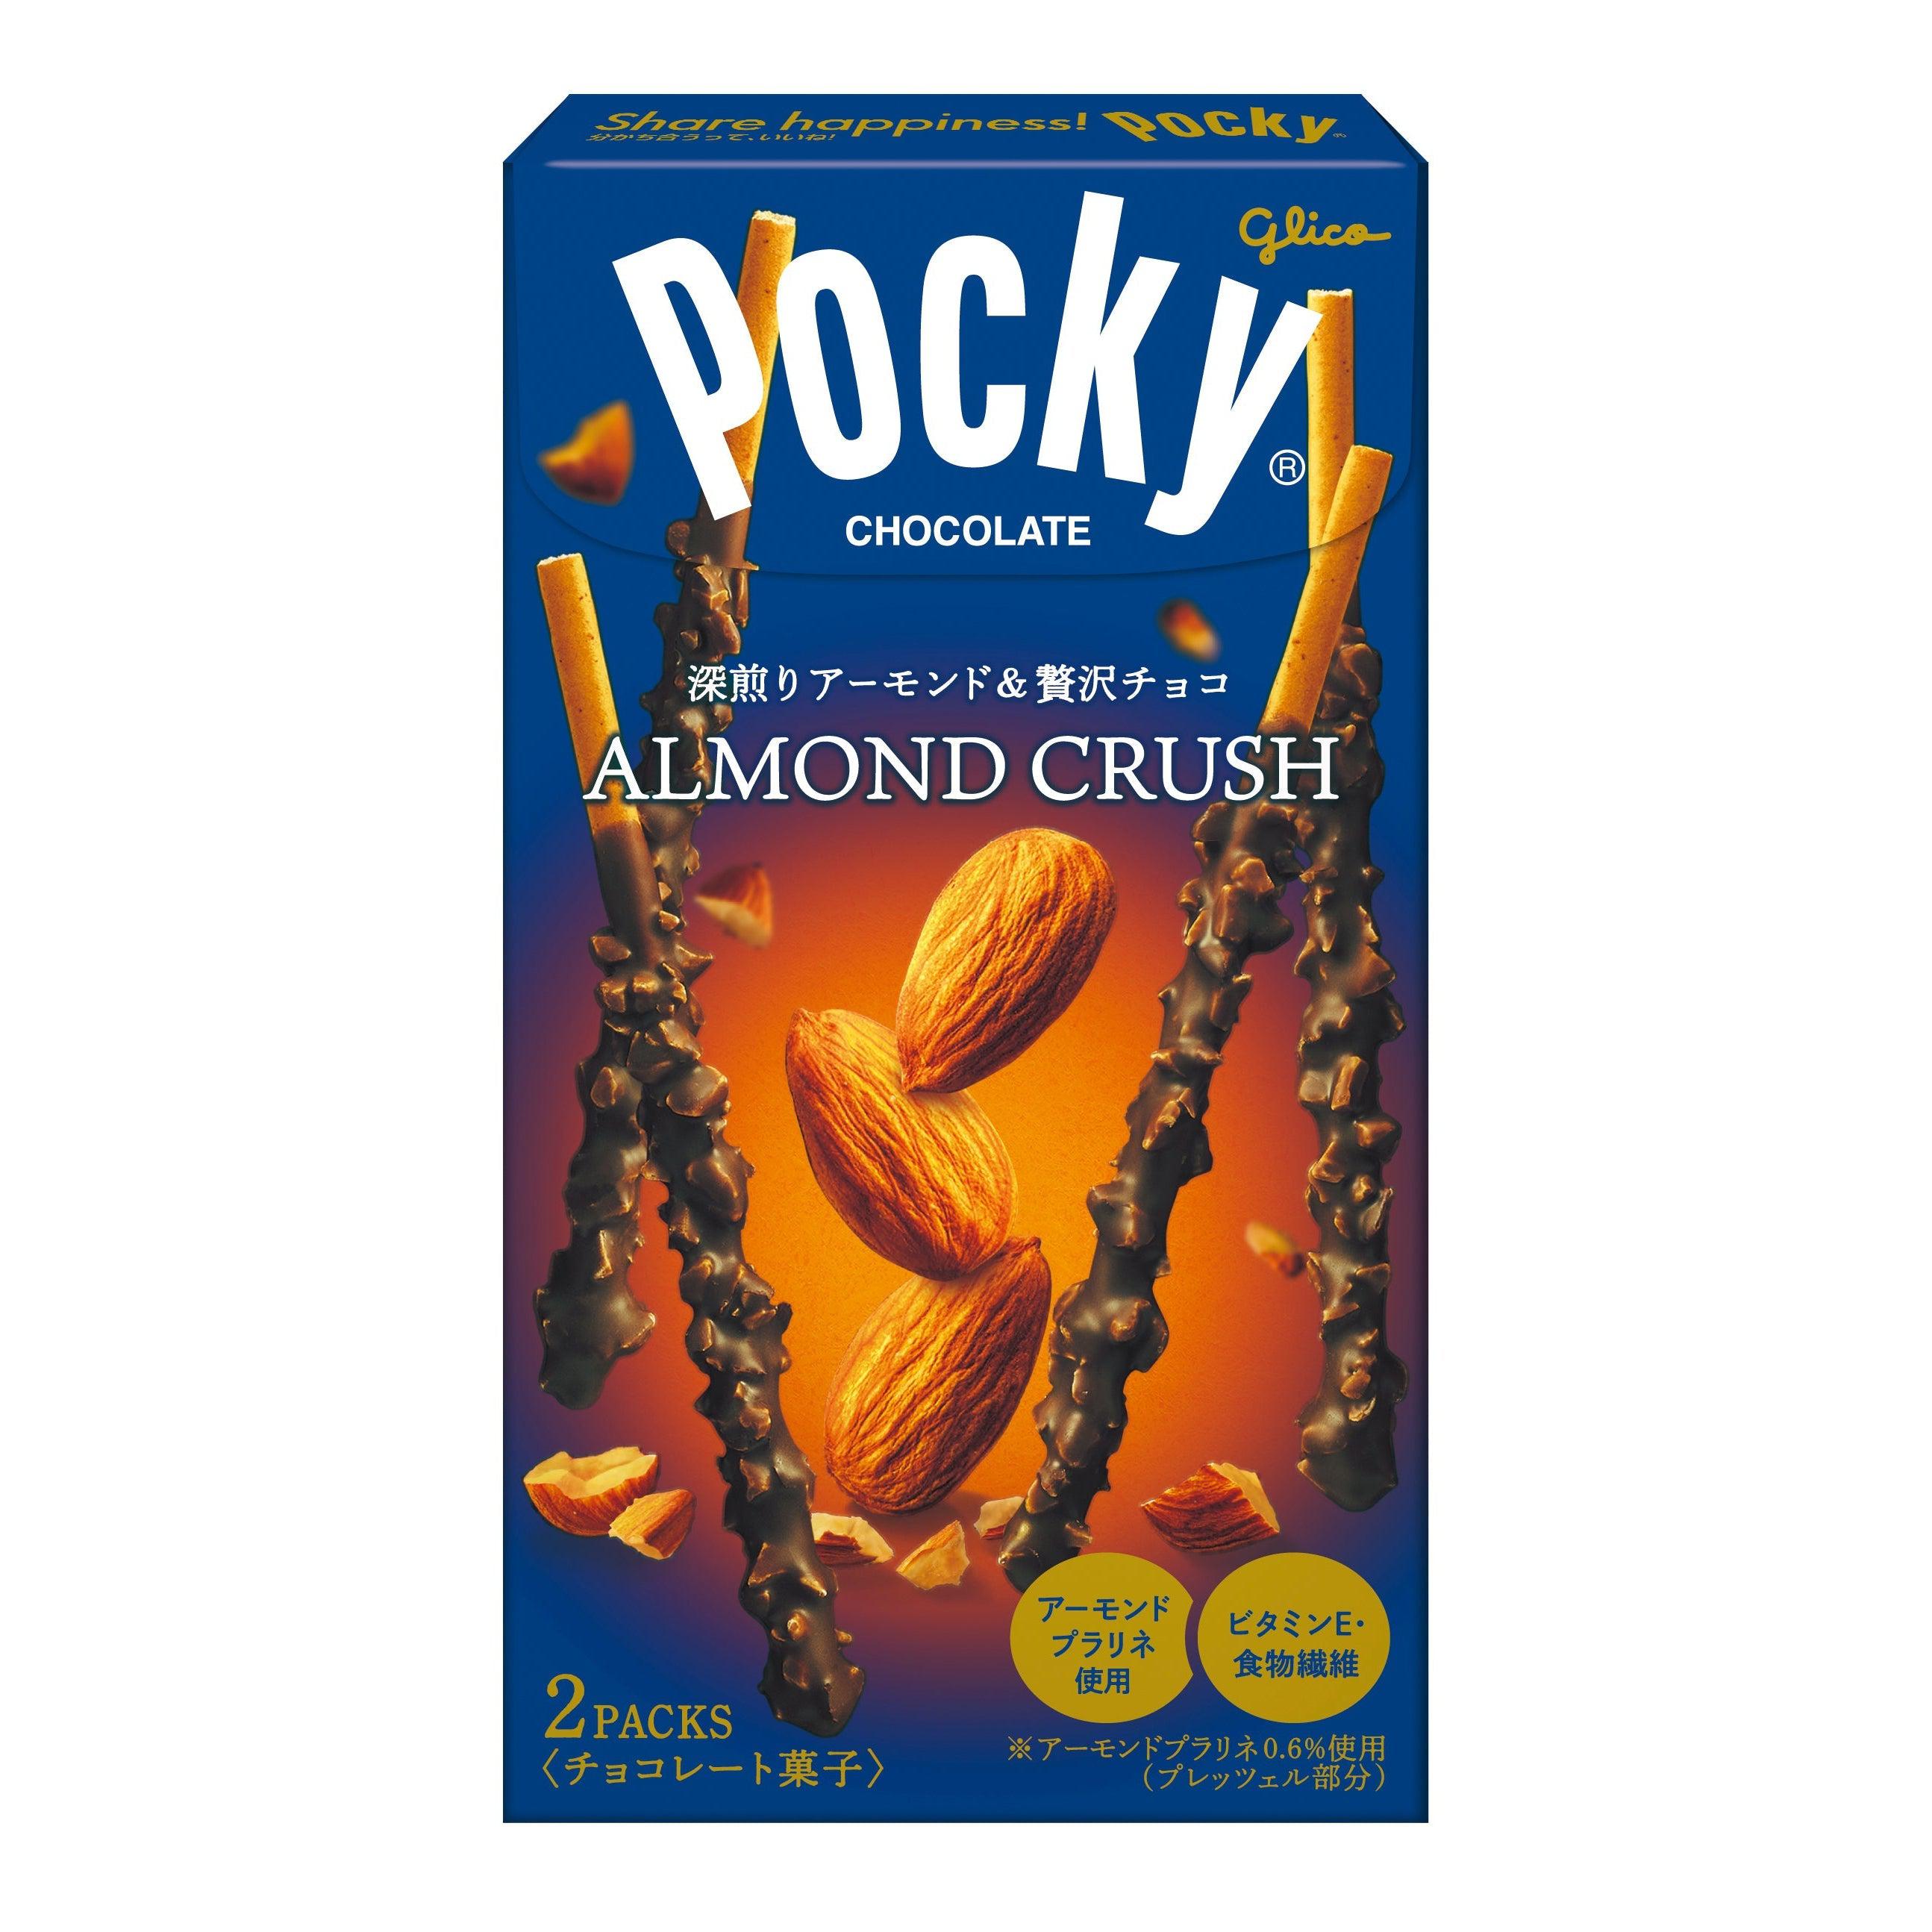 Glico Pocky Almond Crush Chocolate Sticks Snack 46.2g (Pack of 5)